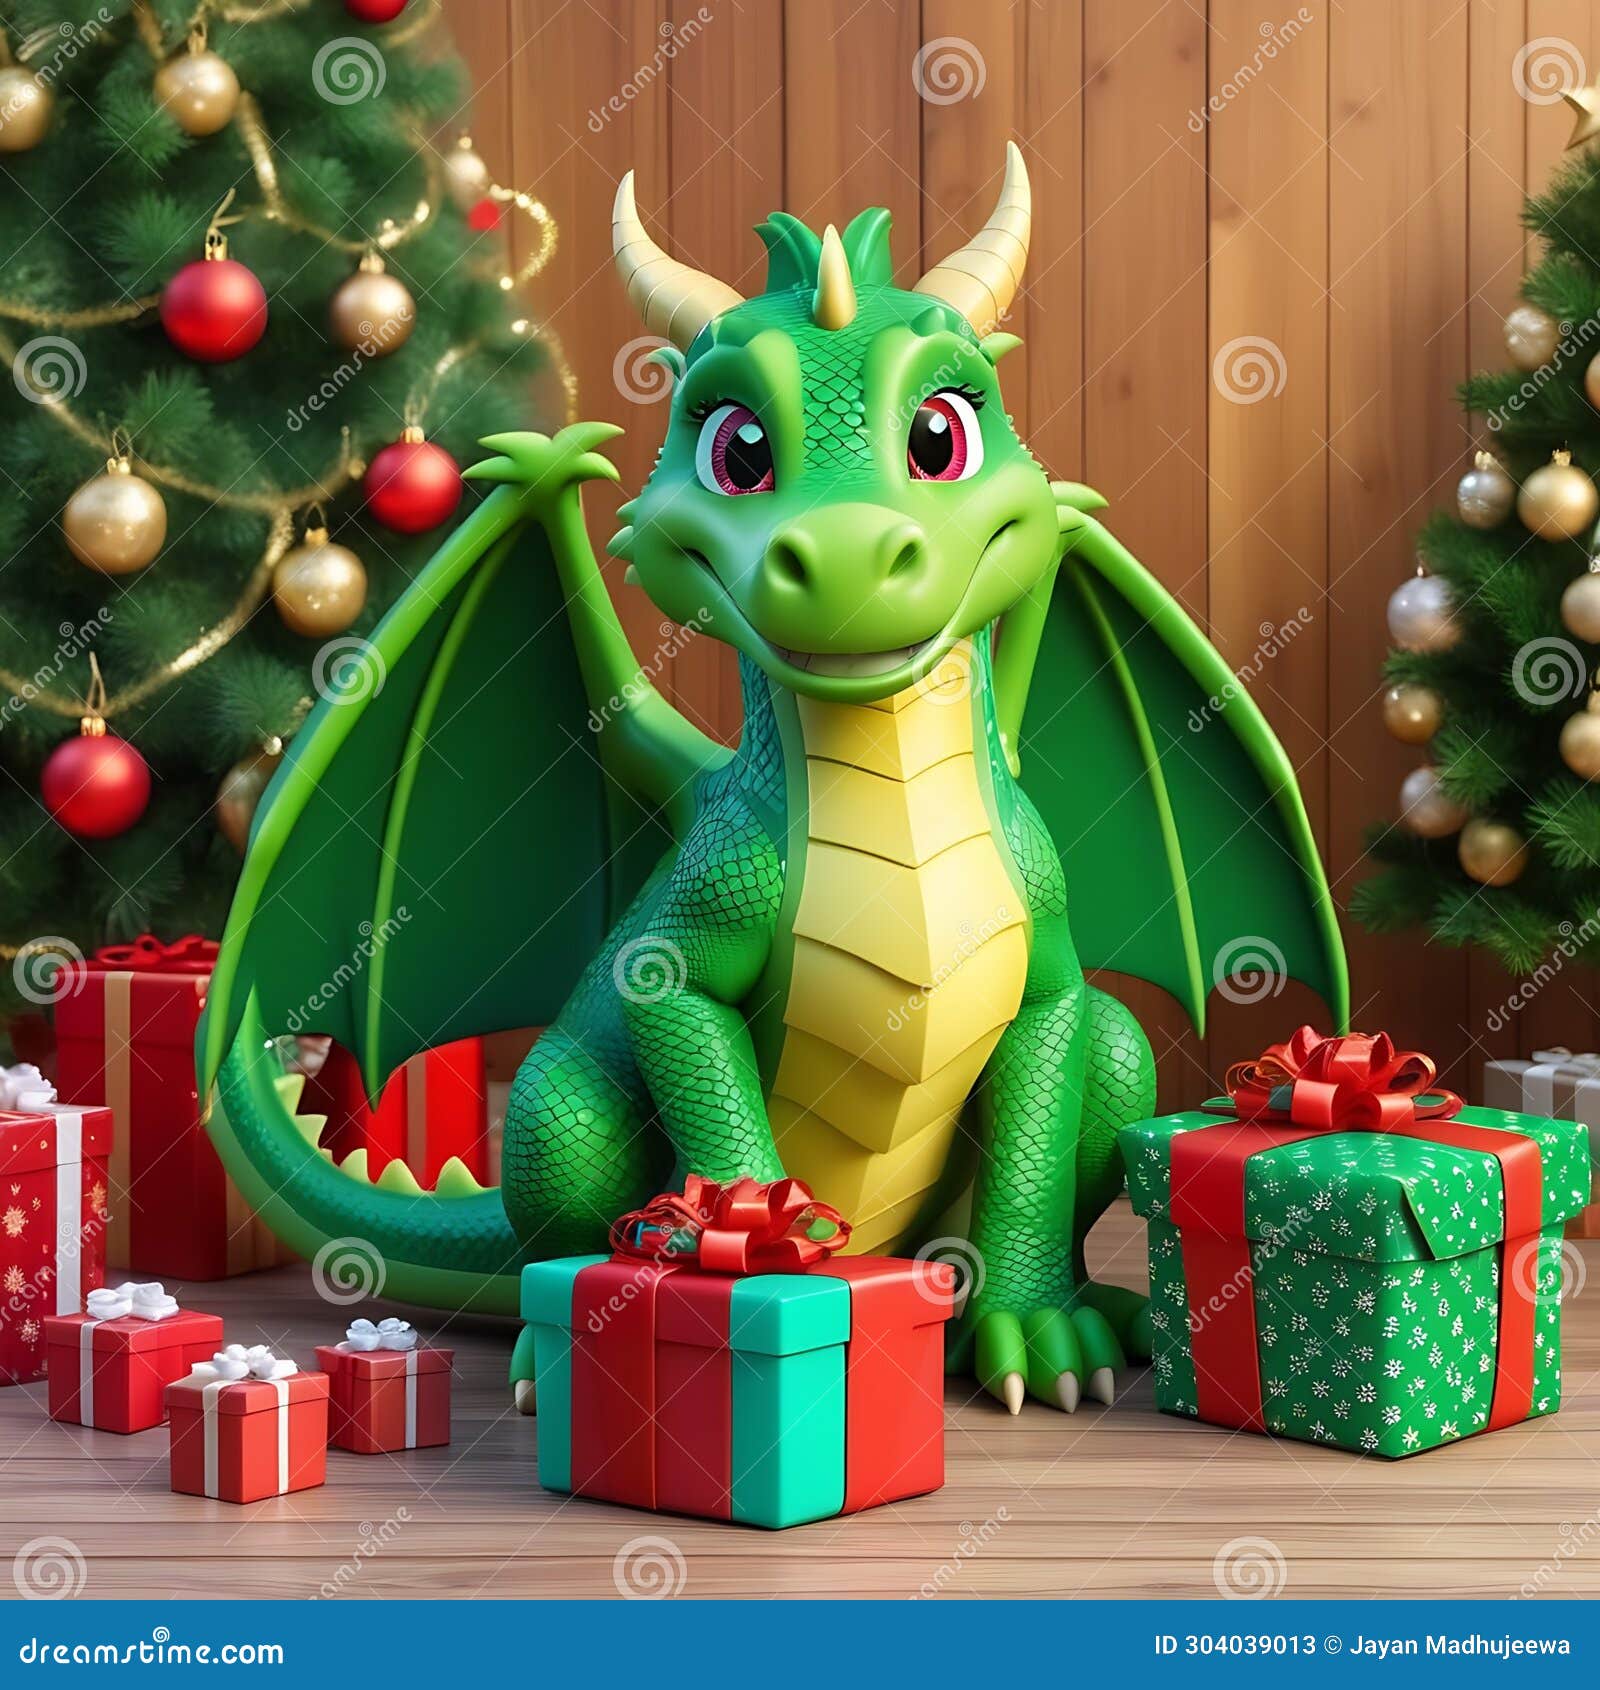 enchanting yuletide dragon: a merry christmas tale